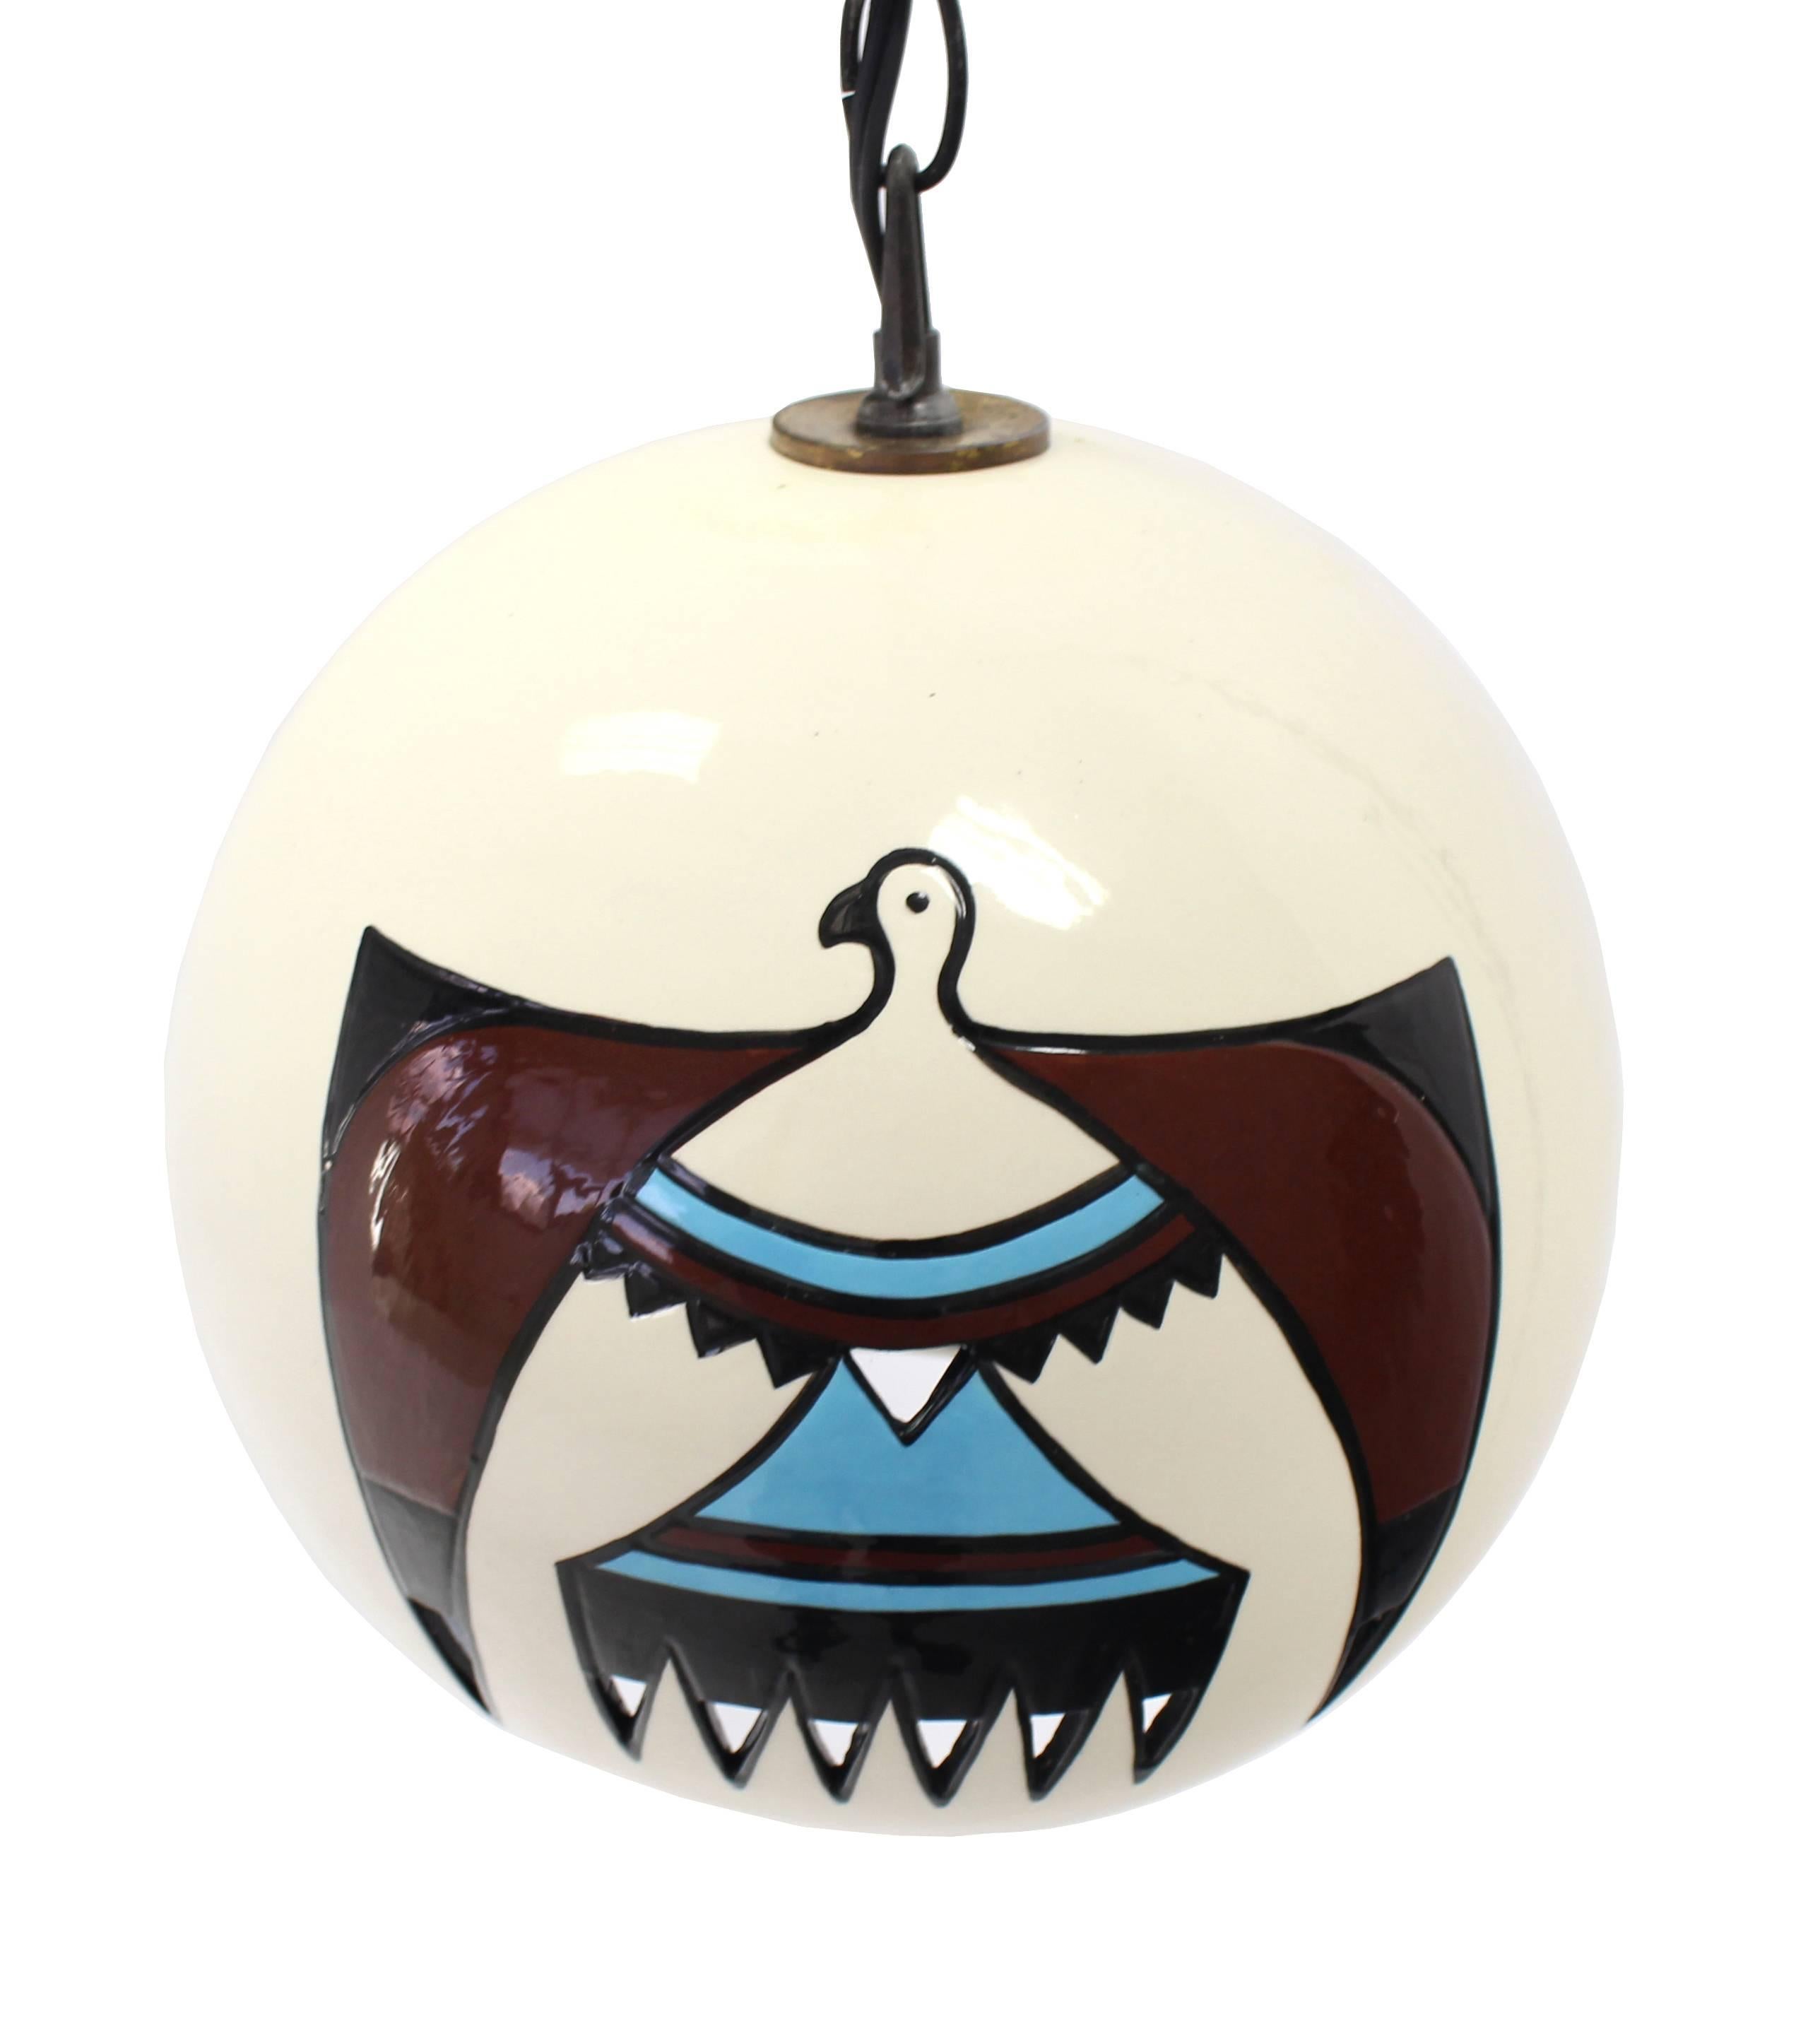 Mid-Century Modern Ceramic Art Decorated Pendant Shade Light Fixture For Sale